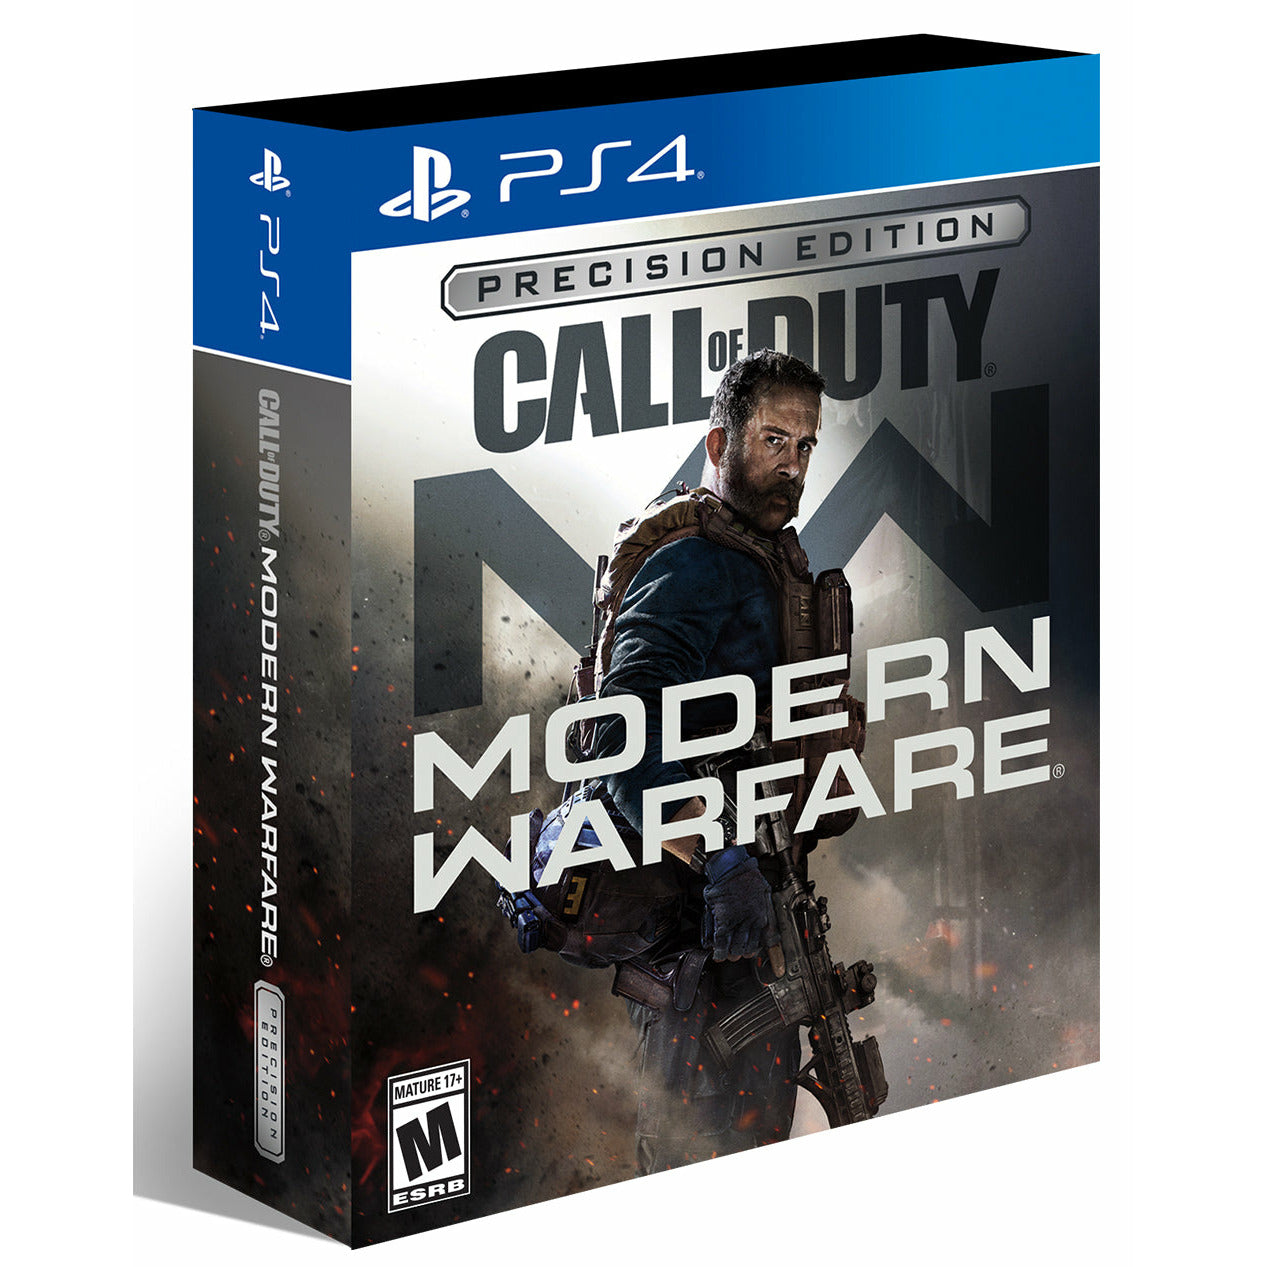 PS4 - Call of Duty Modern Warfare Precision Edition (scellé)